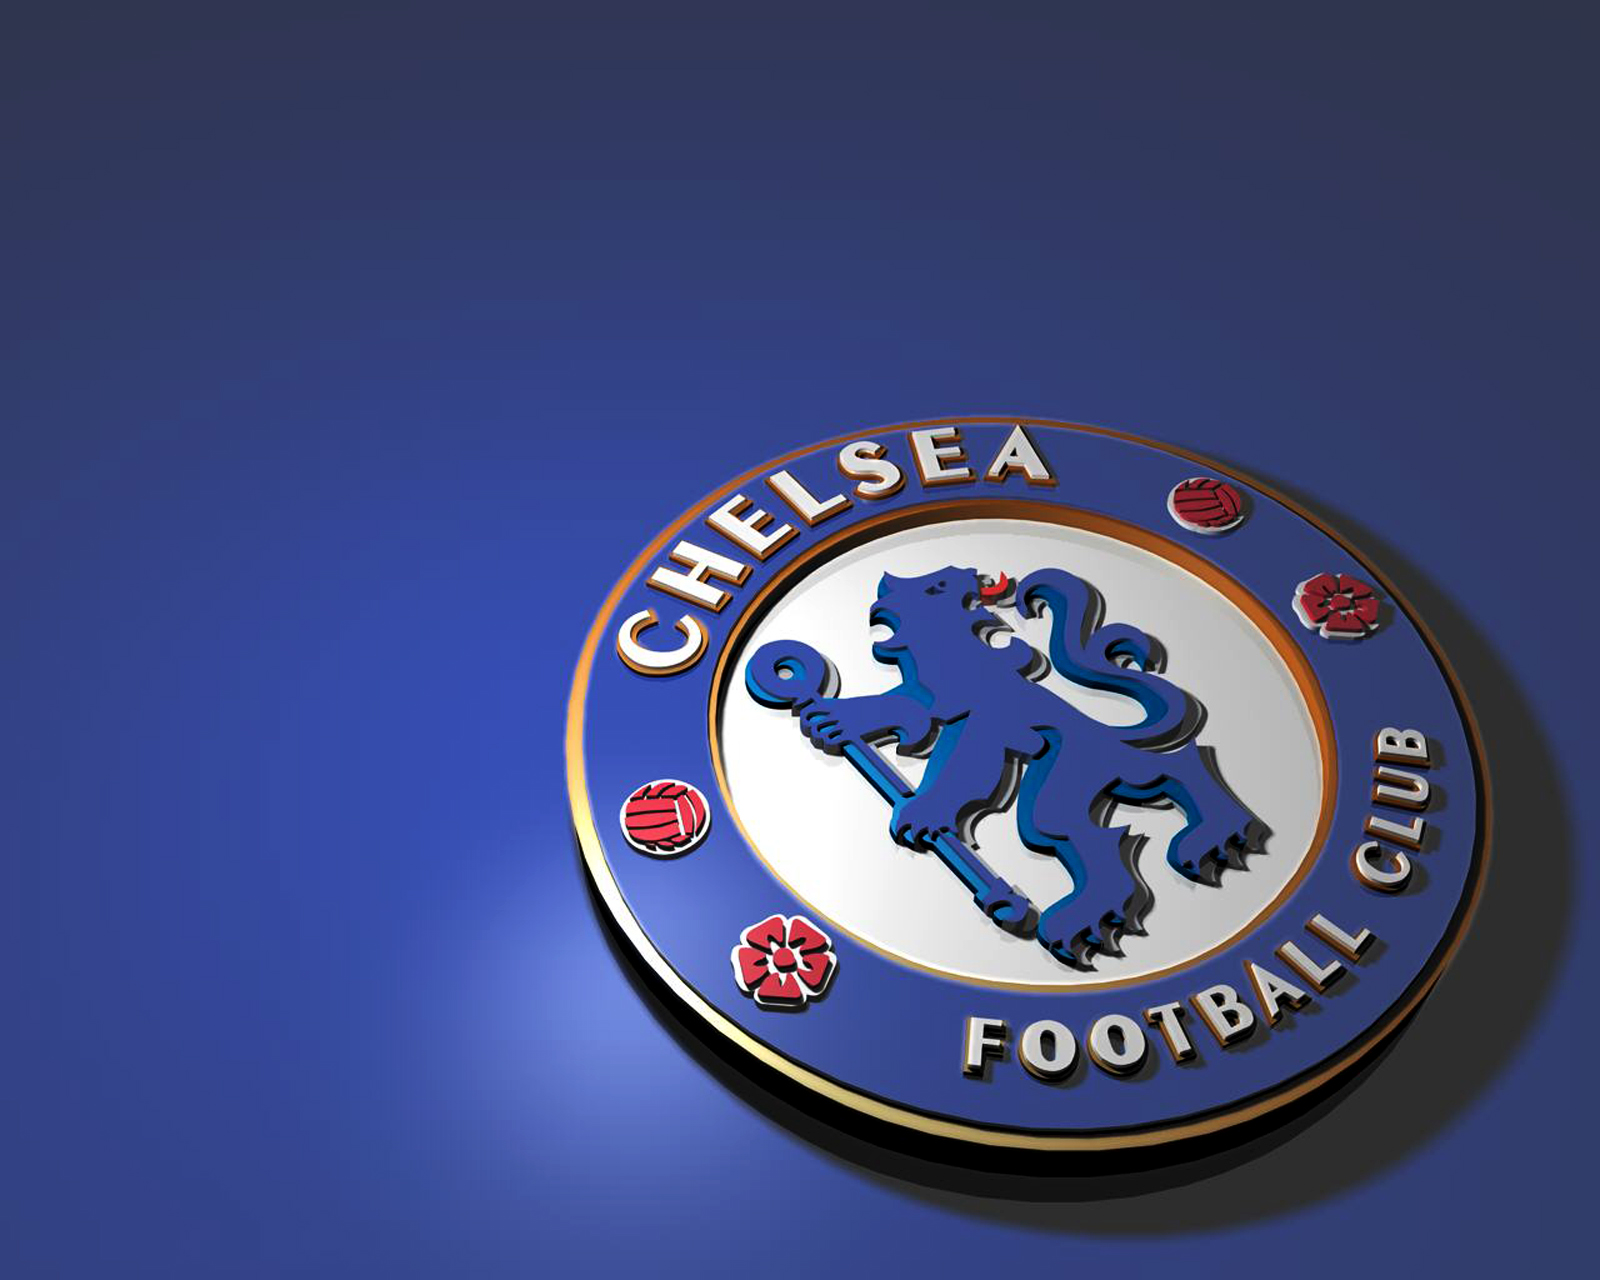 Club nacional de football, Chelsea football club wallpapers